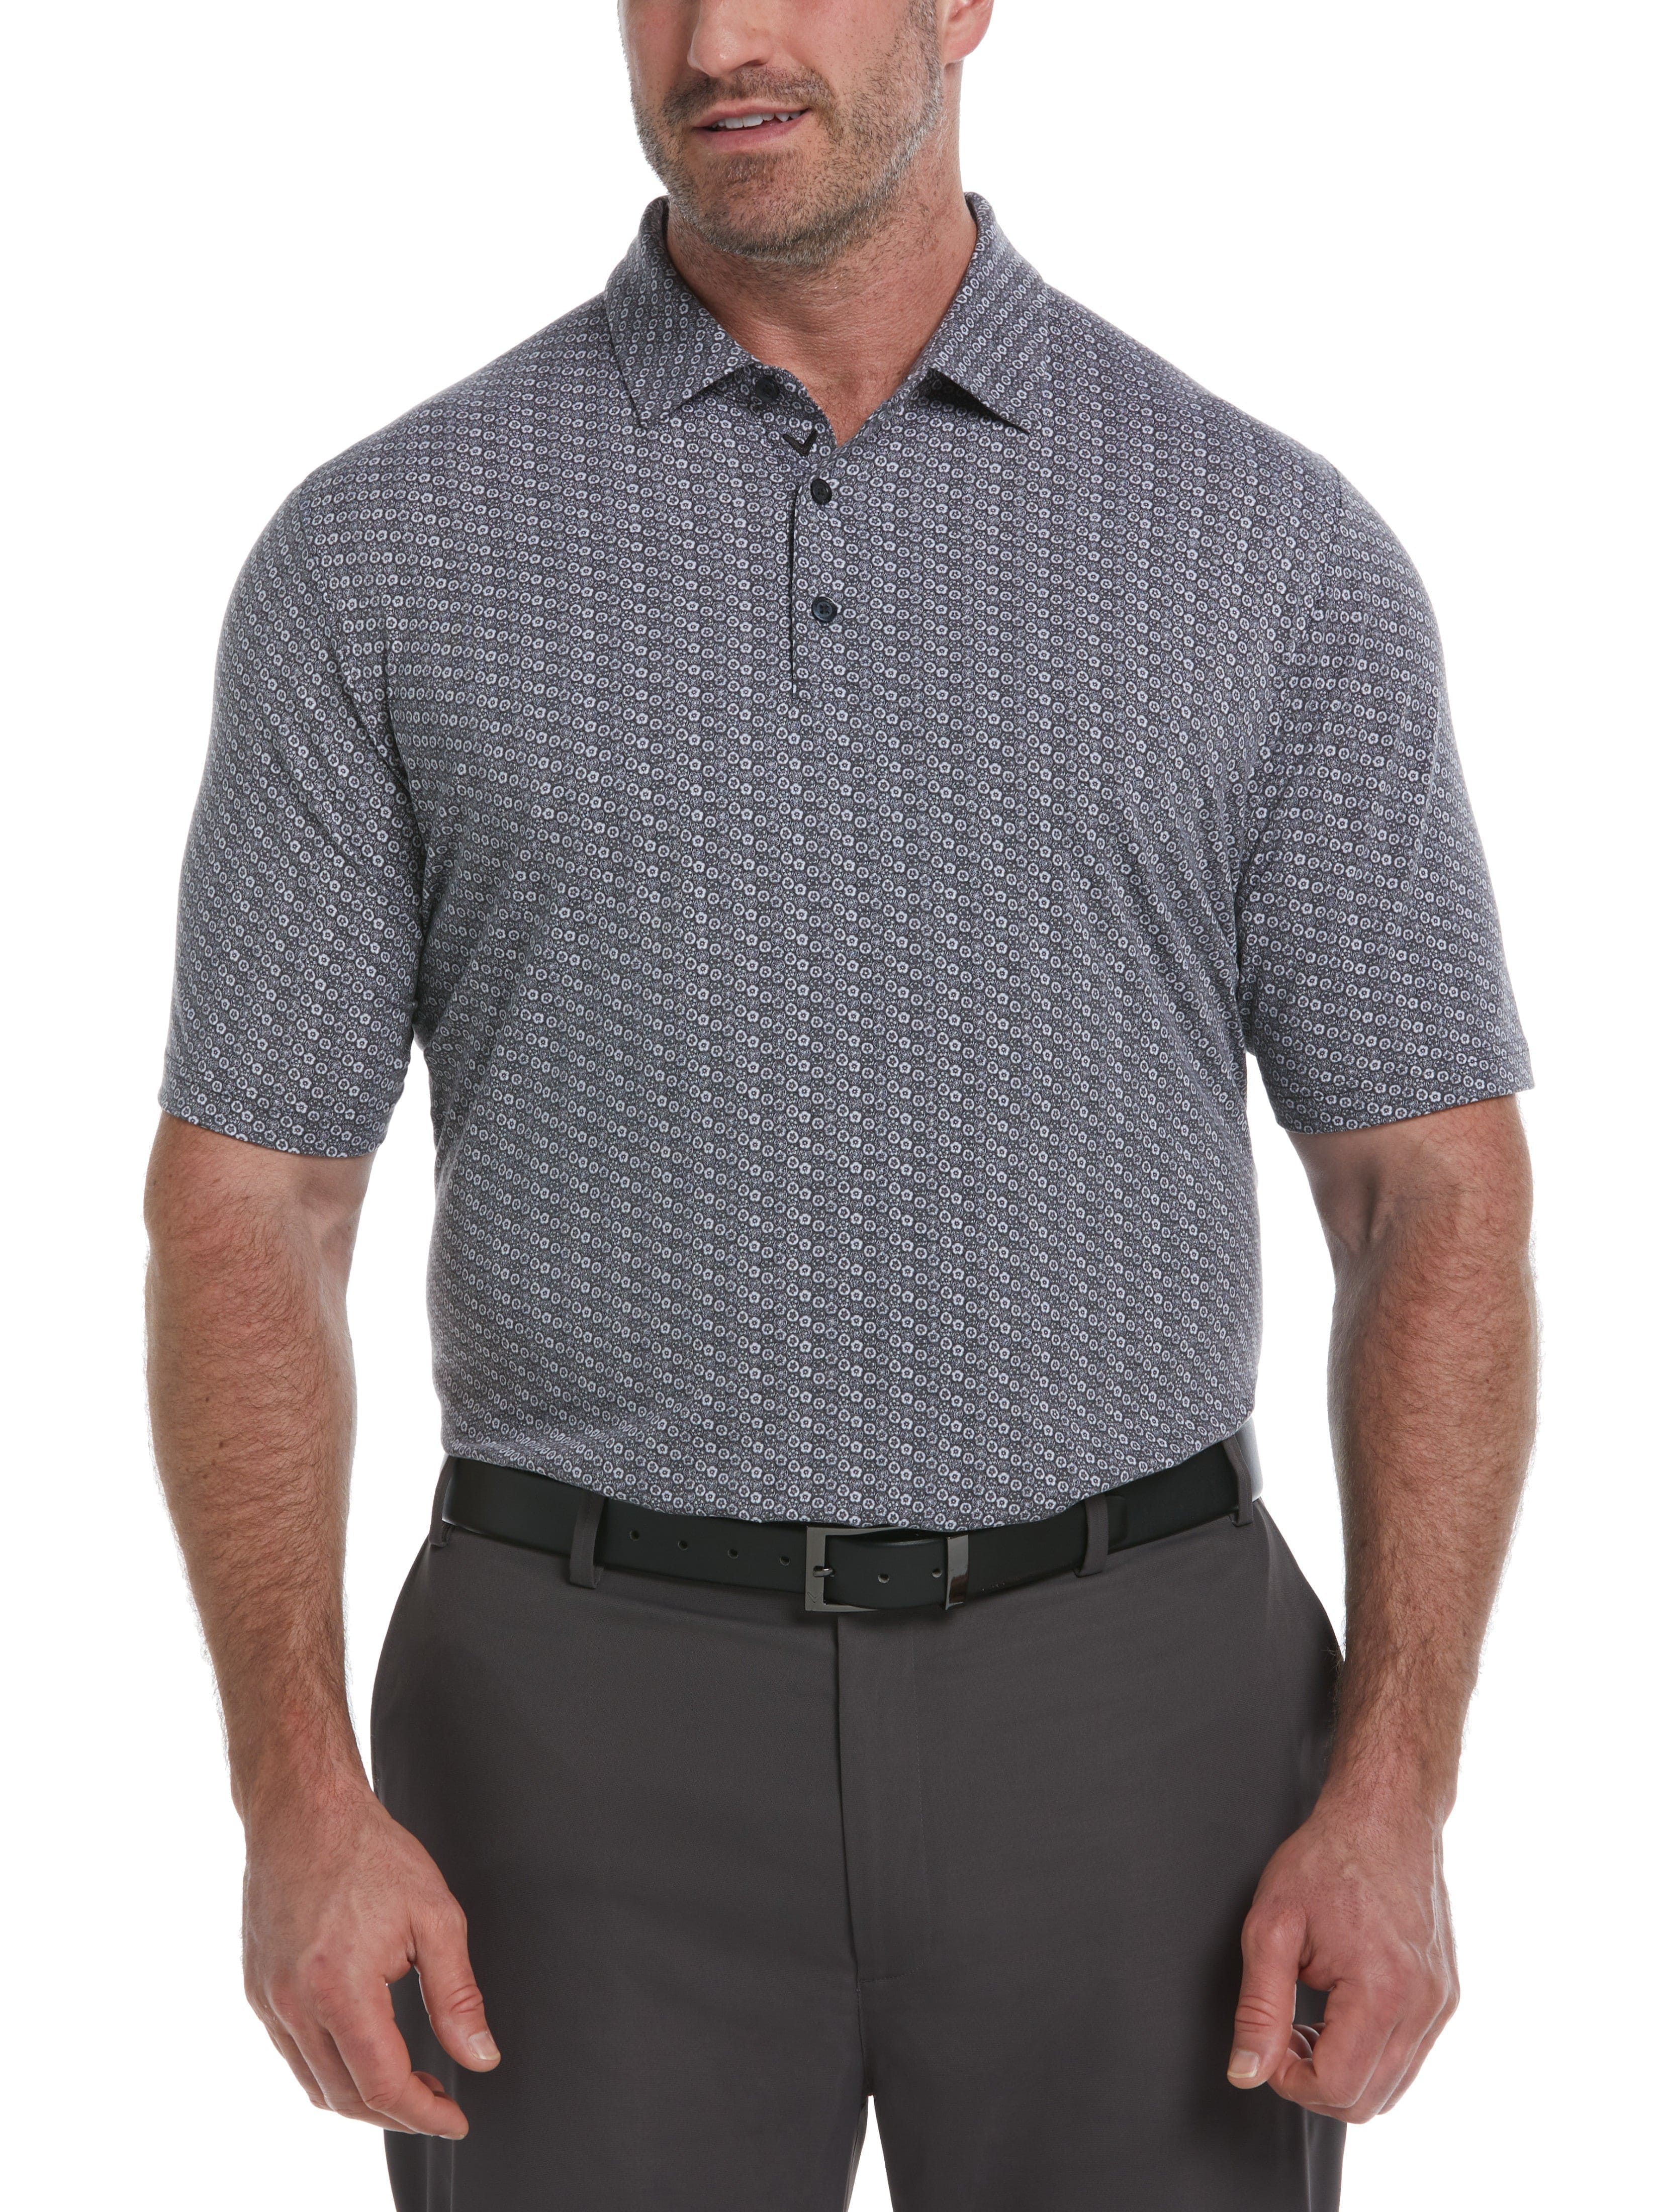 Callaway Apparel Mens Big & Tall Allover Tie Dye Foulard Print Golf Polo Shirt, Size 4X, Black, Polyester/Cotton/Elastane | Golf Apparel Shop